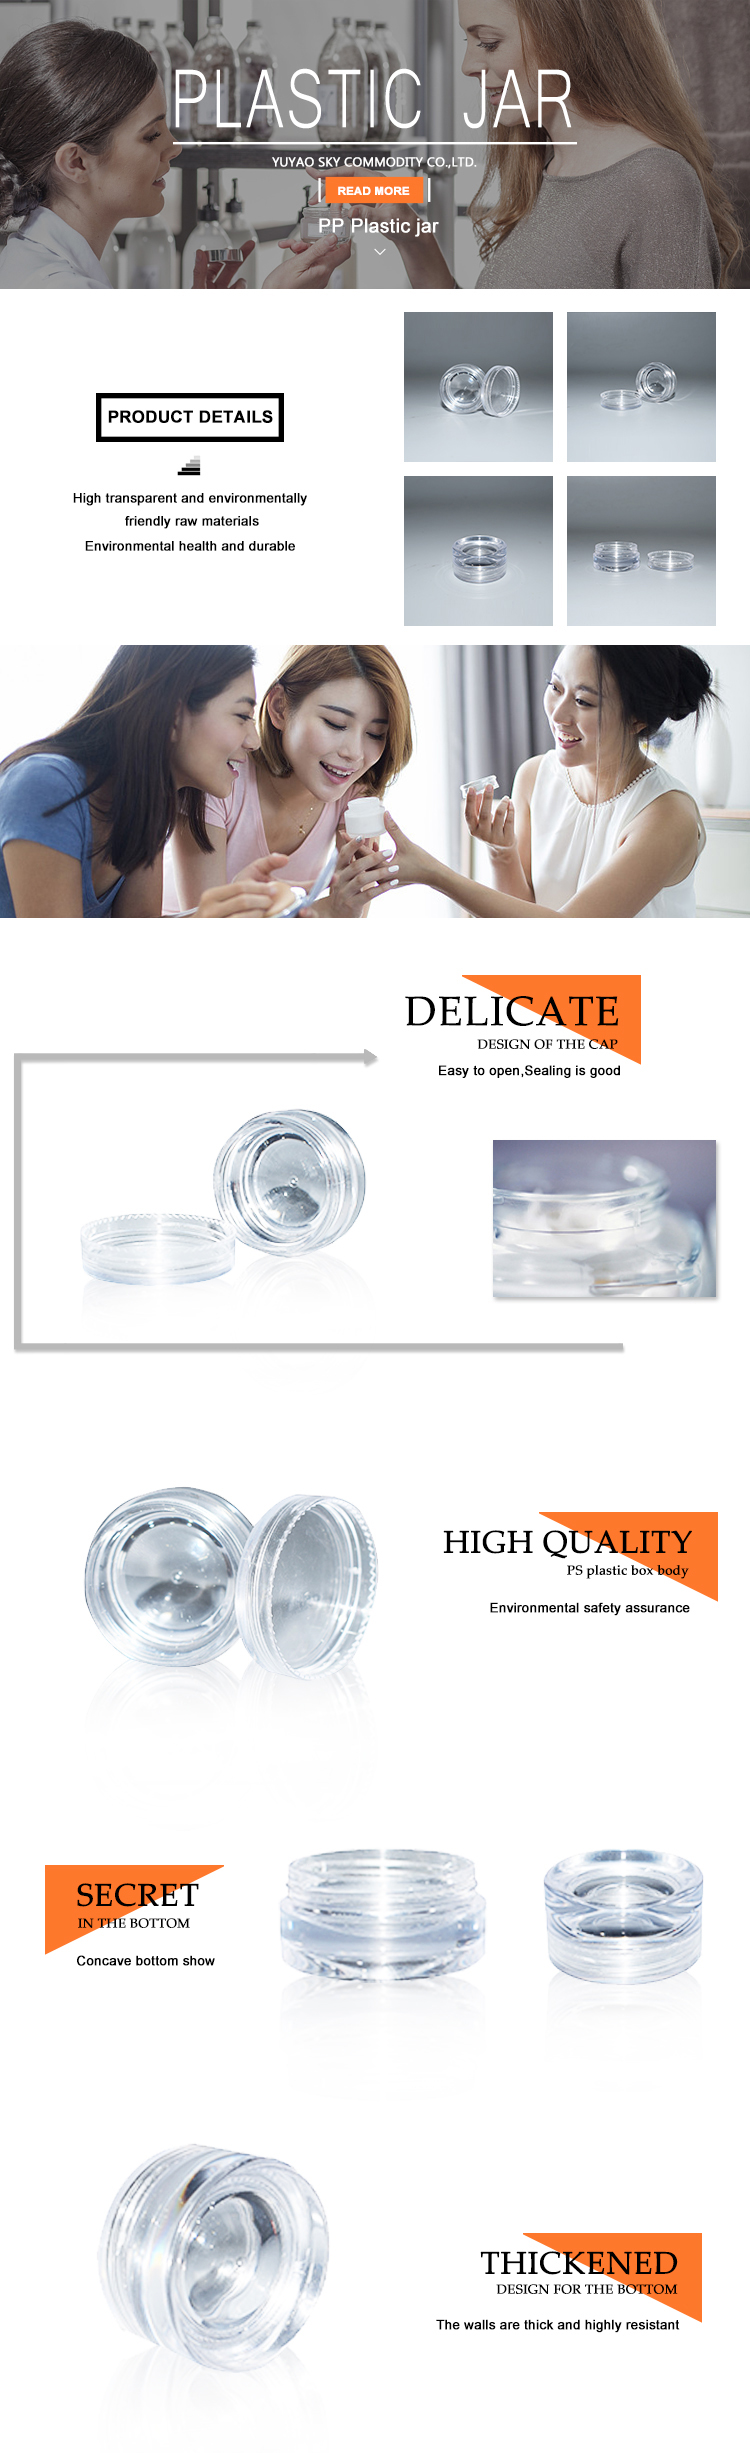 White high quality can accommodate 20ml plastic jar